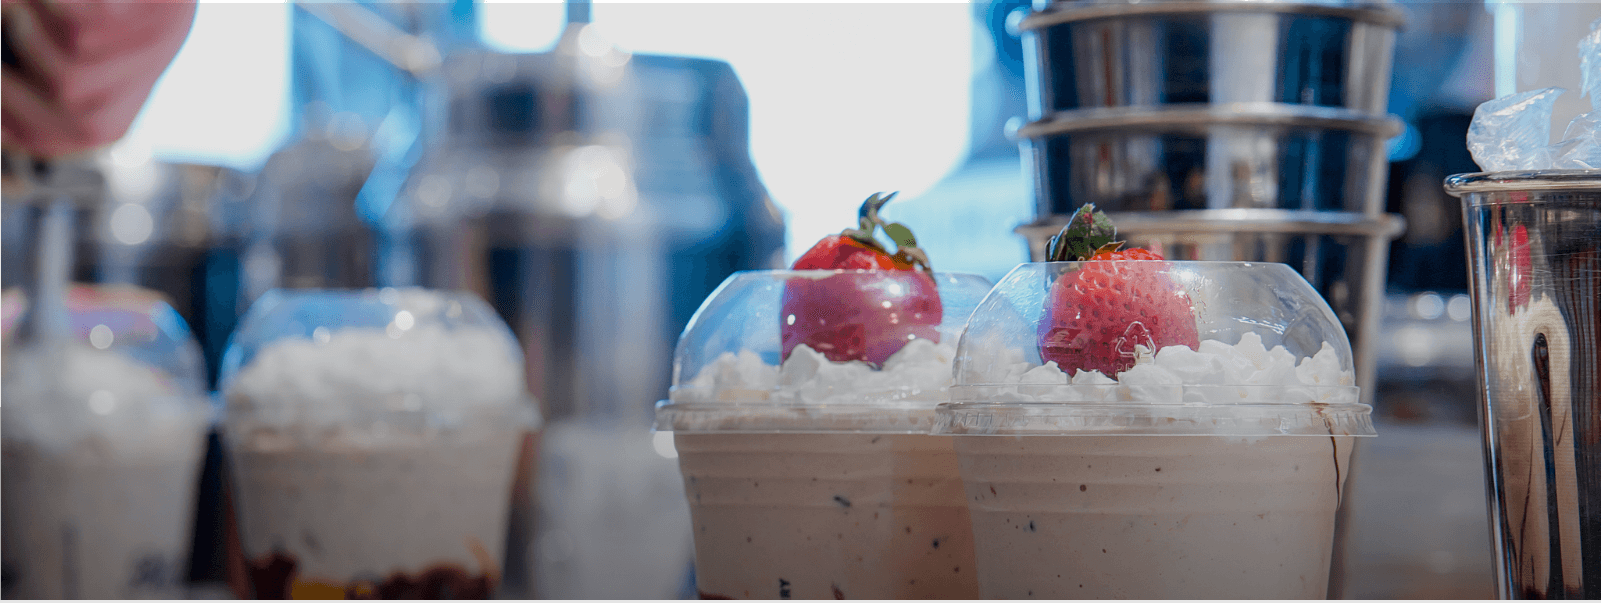 two milkshakes with strawberries on top